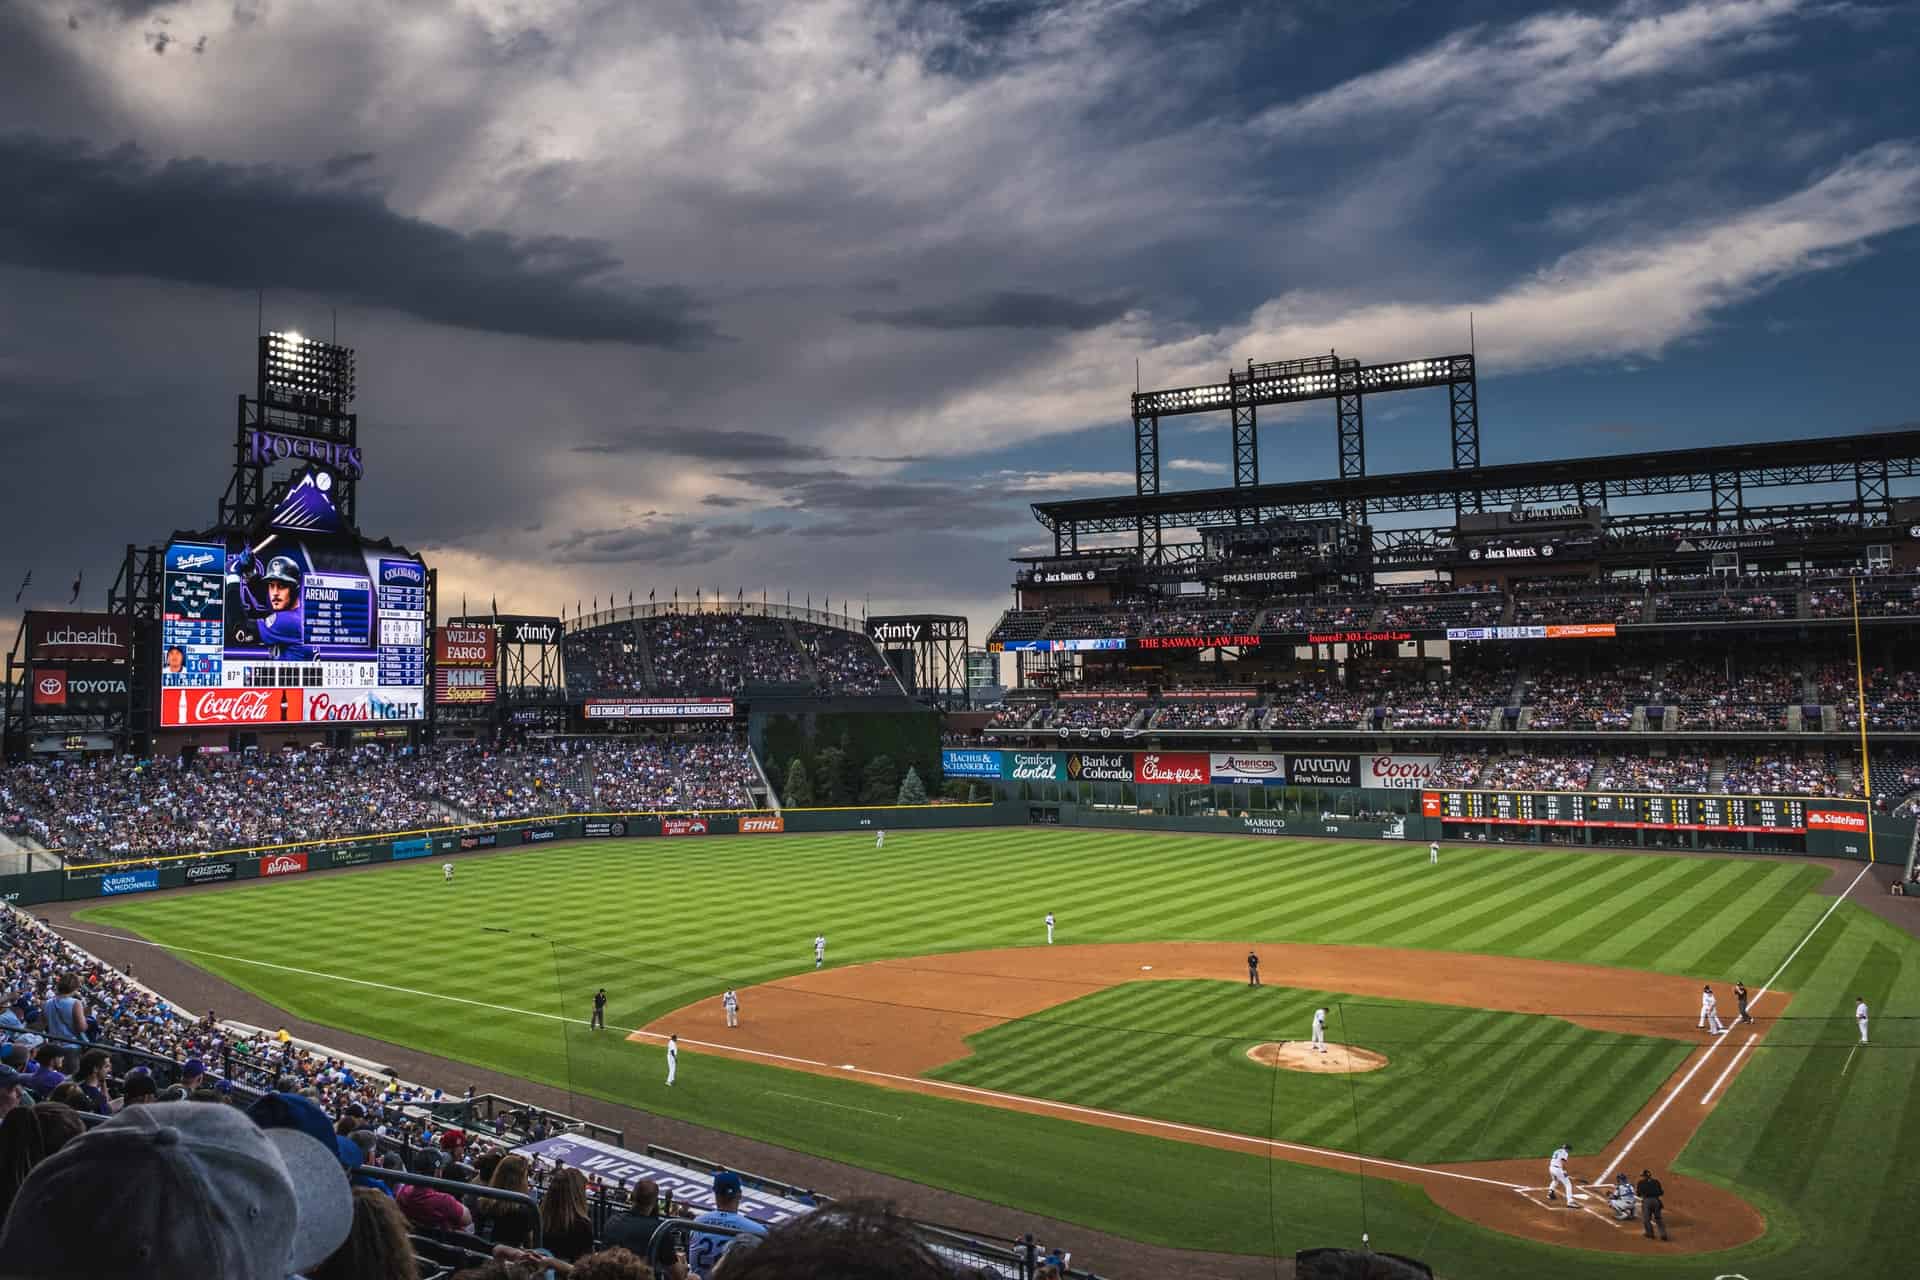 Best things to do in Denver Colorado - Mitch Krayton - Coors Field Colorado Rockies baseball game photo by Owen Lystrup on Unsplash